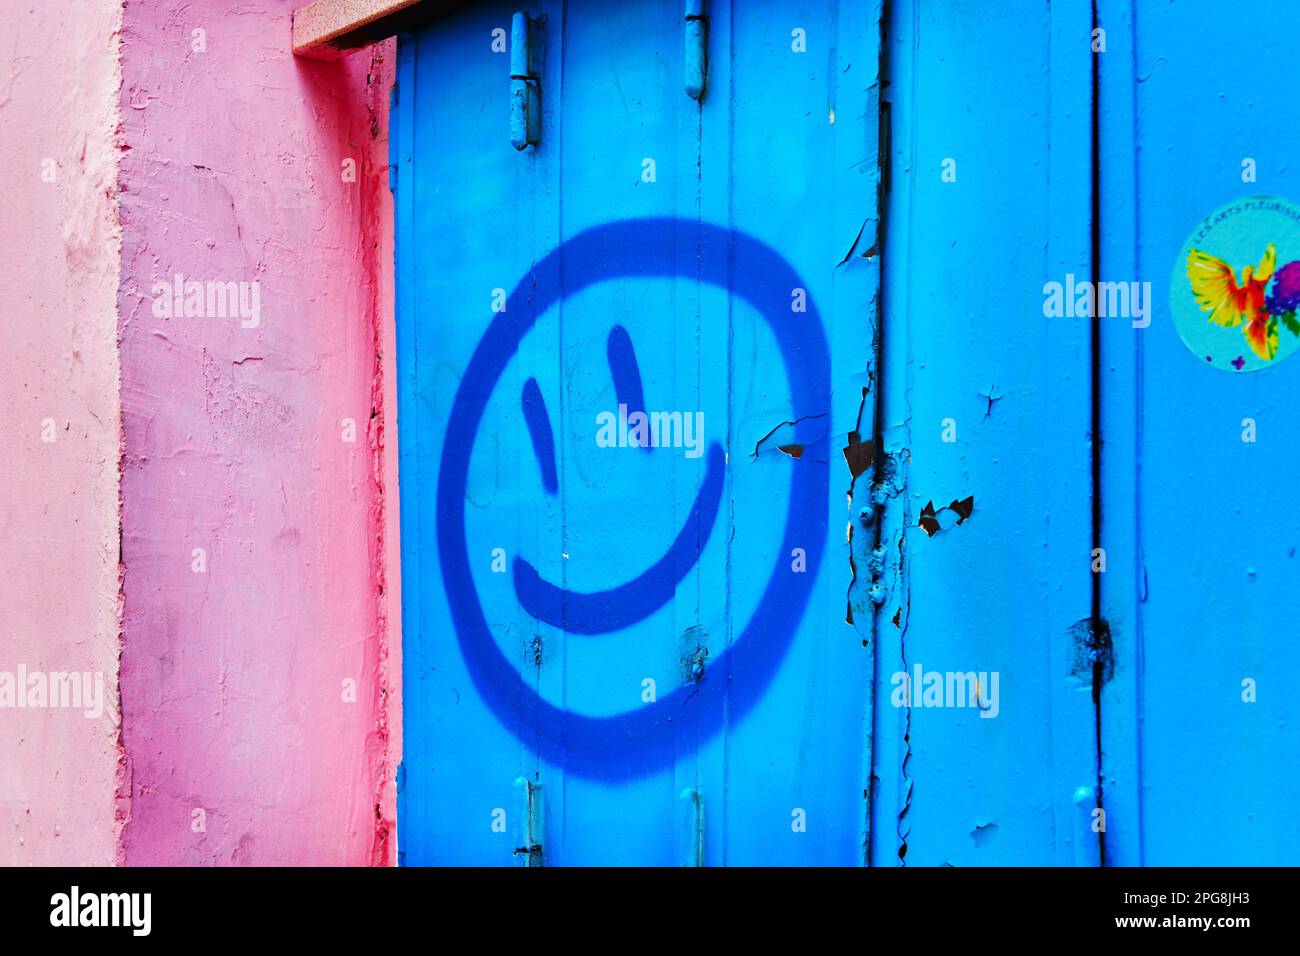 Smiley Street Art in Montmartre - Paris - France Stock Photo